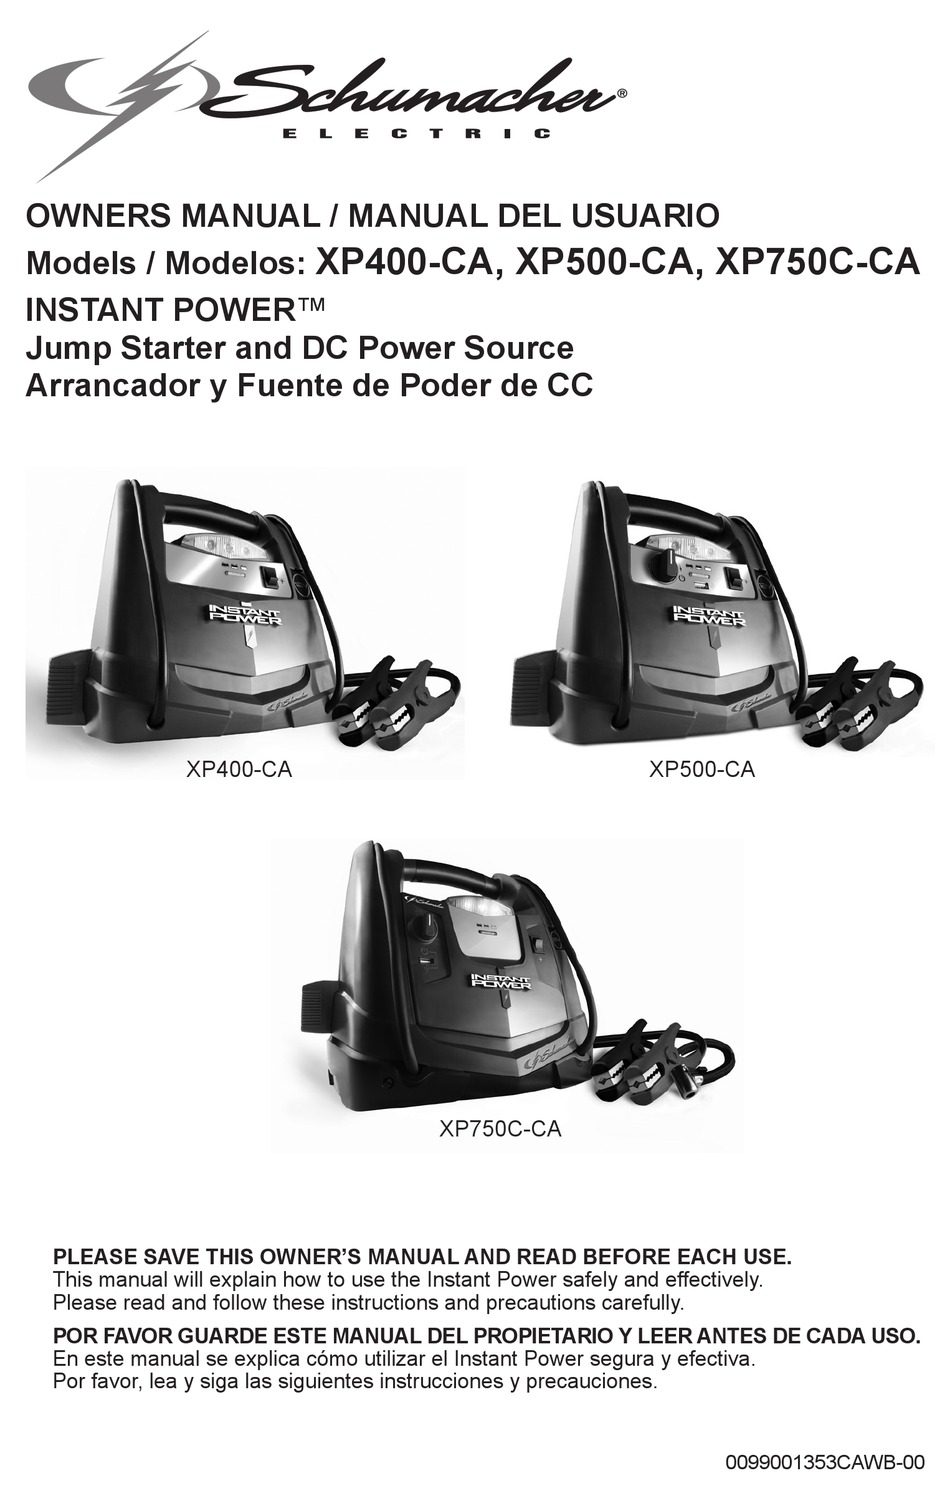 SCHUMACHER INSTANT POWER XP400-CA OWNER'S MANUAL Pdf Download | ManualsLib